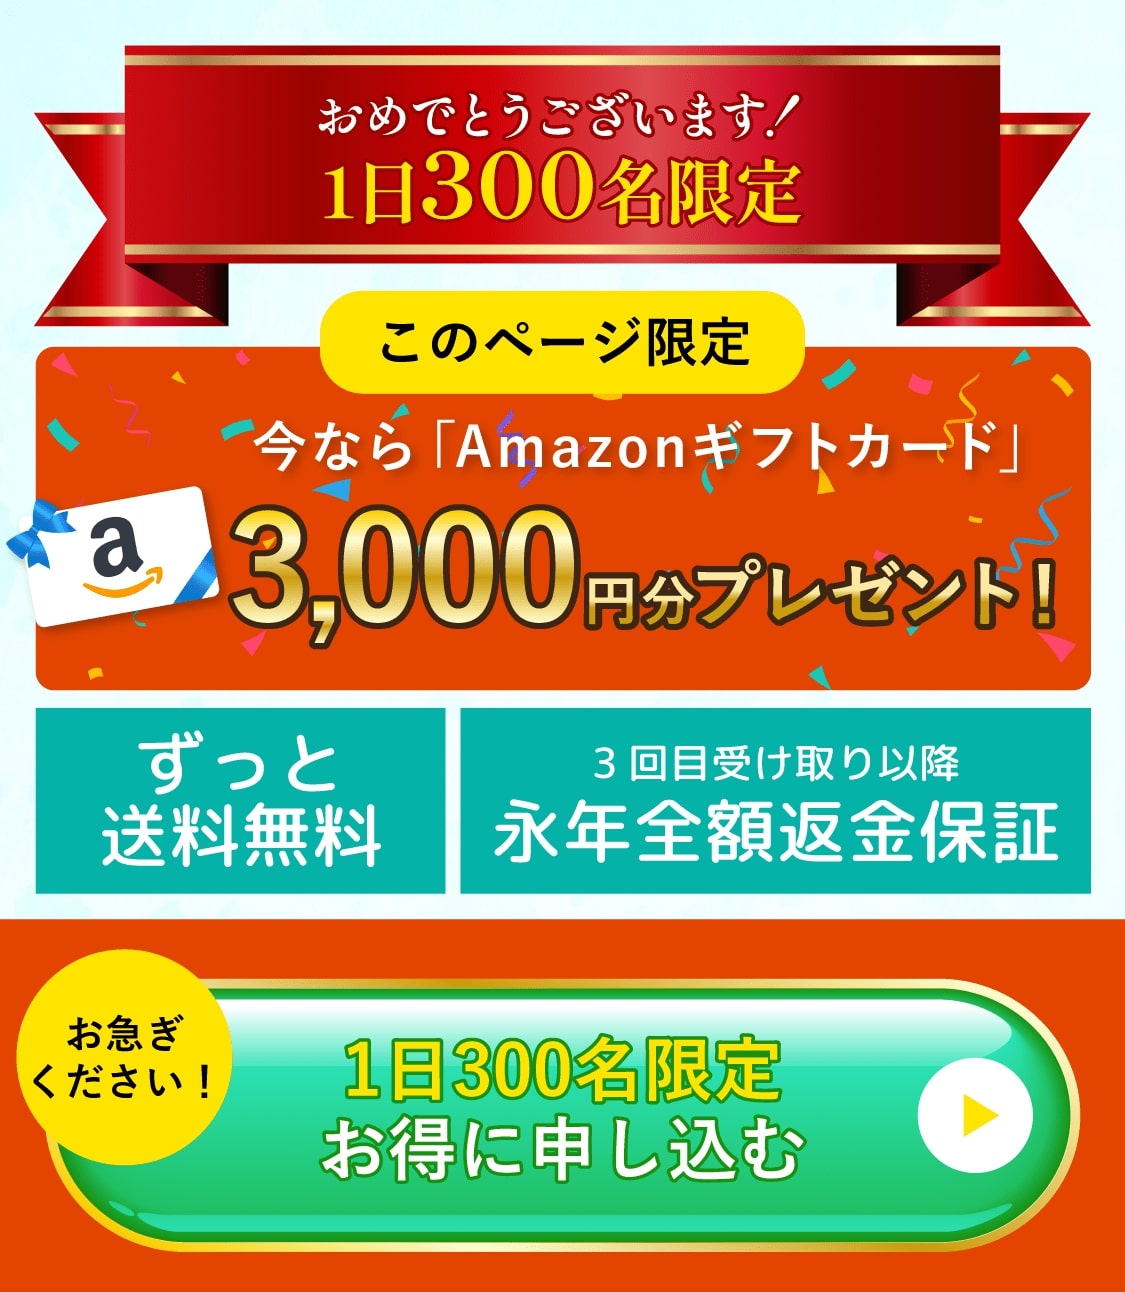  Amazonギフト3,000円分プレゼント